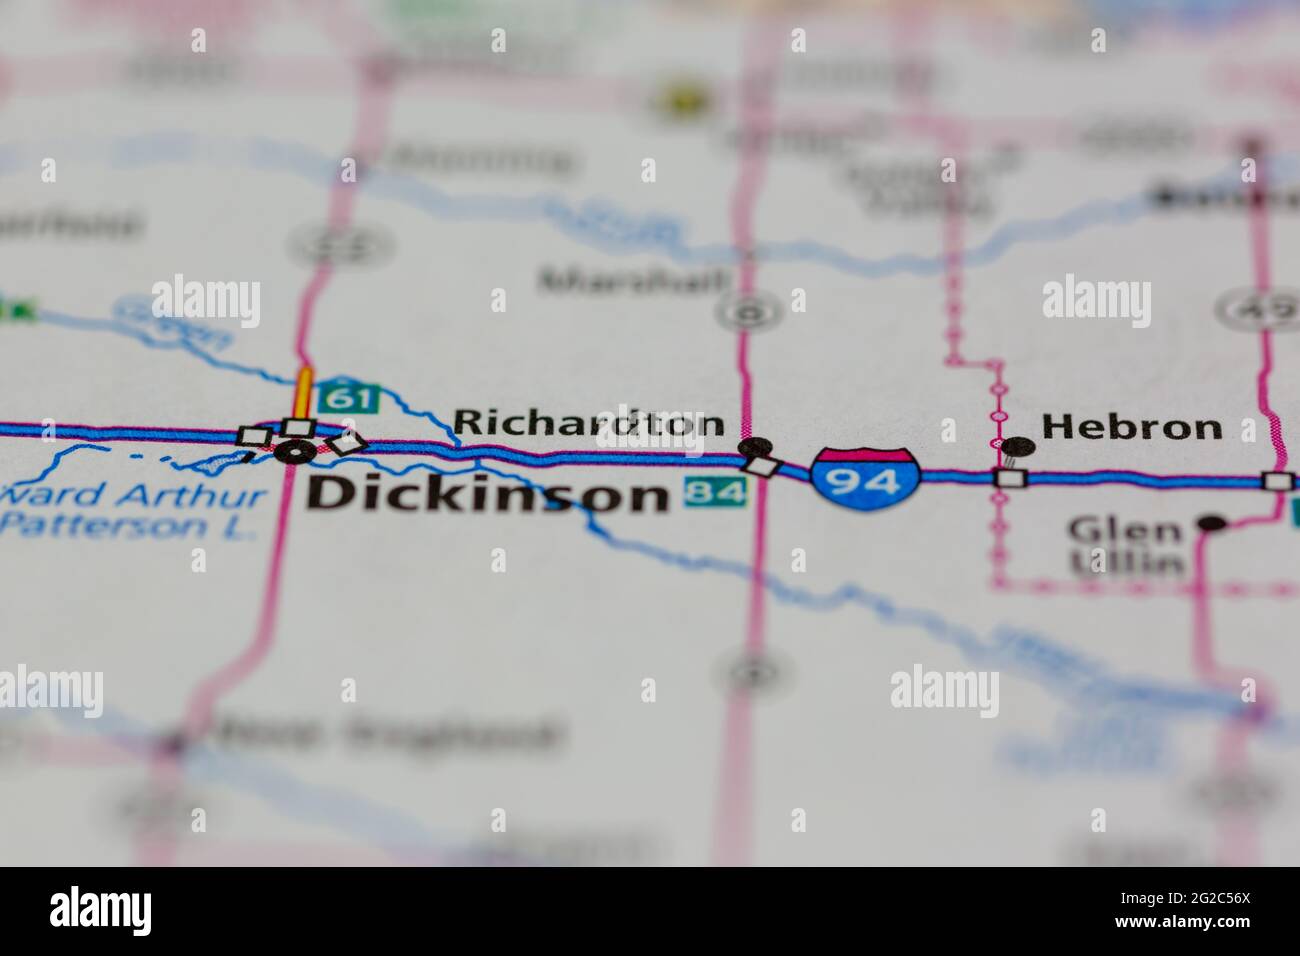 Richardton North Dakota USA shown of a Road map or Geography map Stock Photo